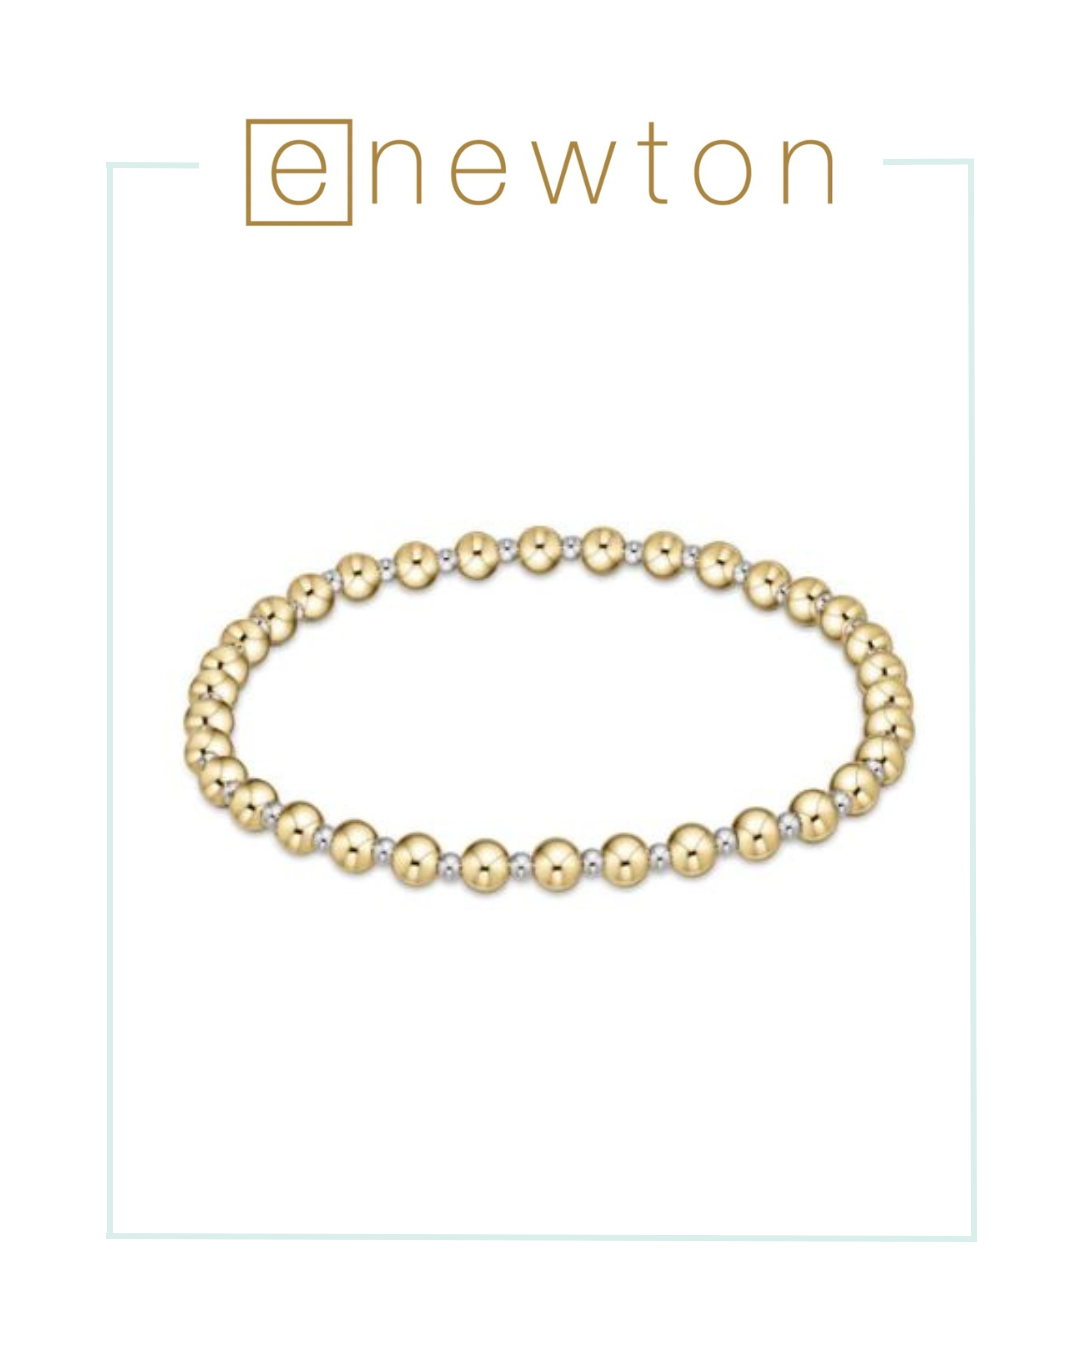 E Newton Classic Grateful Pattern 4mm Bead Bracelet - Mixed Metal-Bracelets-ENEWTON-The Village Shoppe, Women’s Fashion Boutique, Shop Online and In Store - Located in Muscle Shoals, AL.